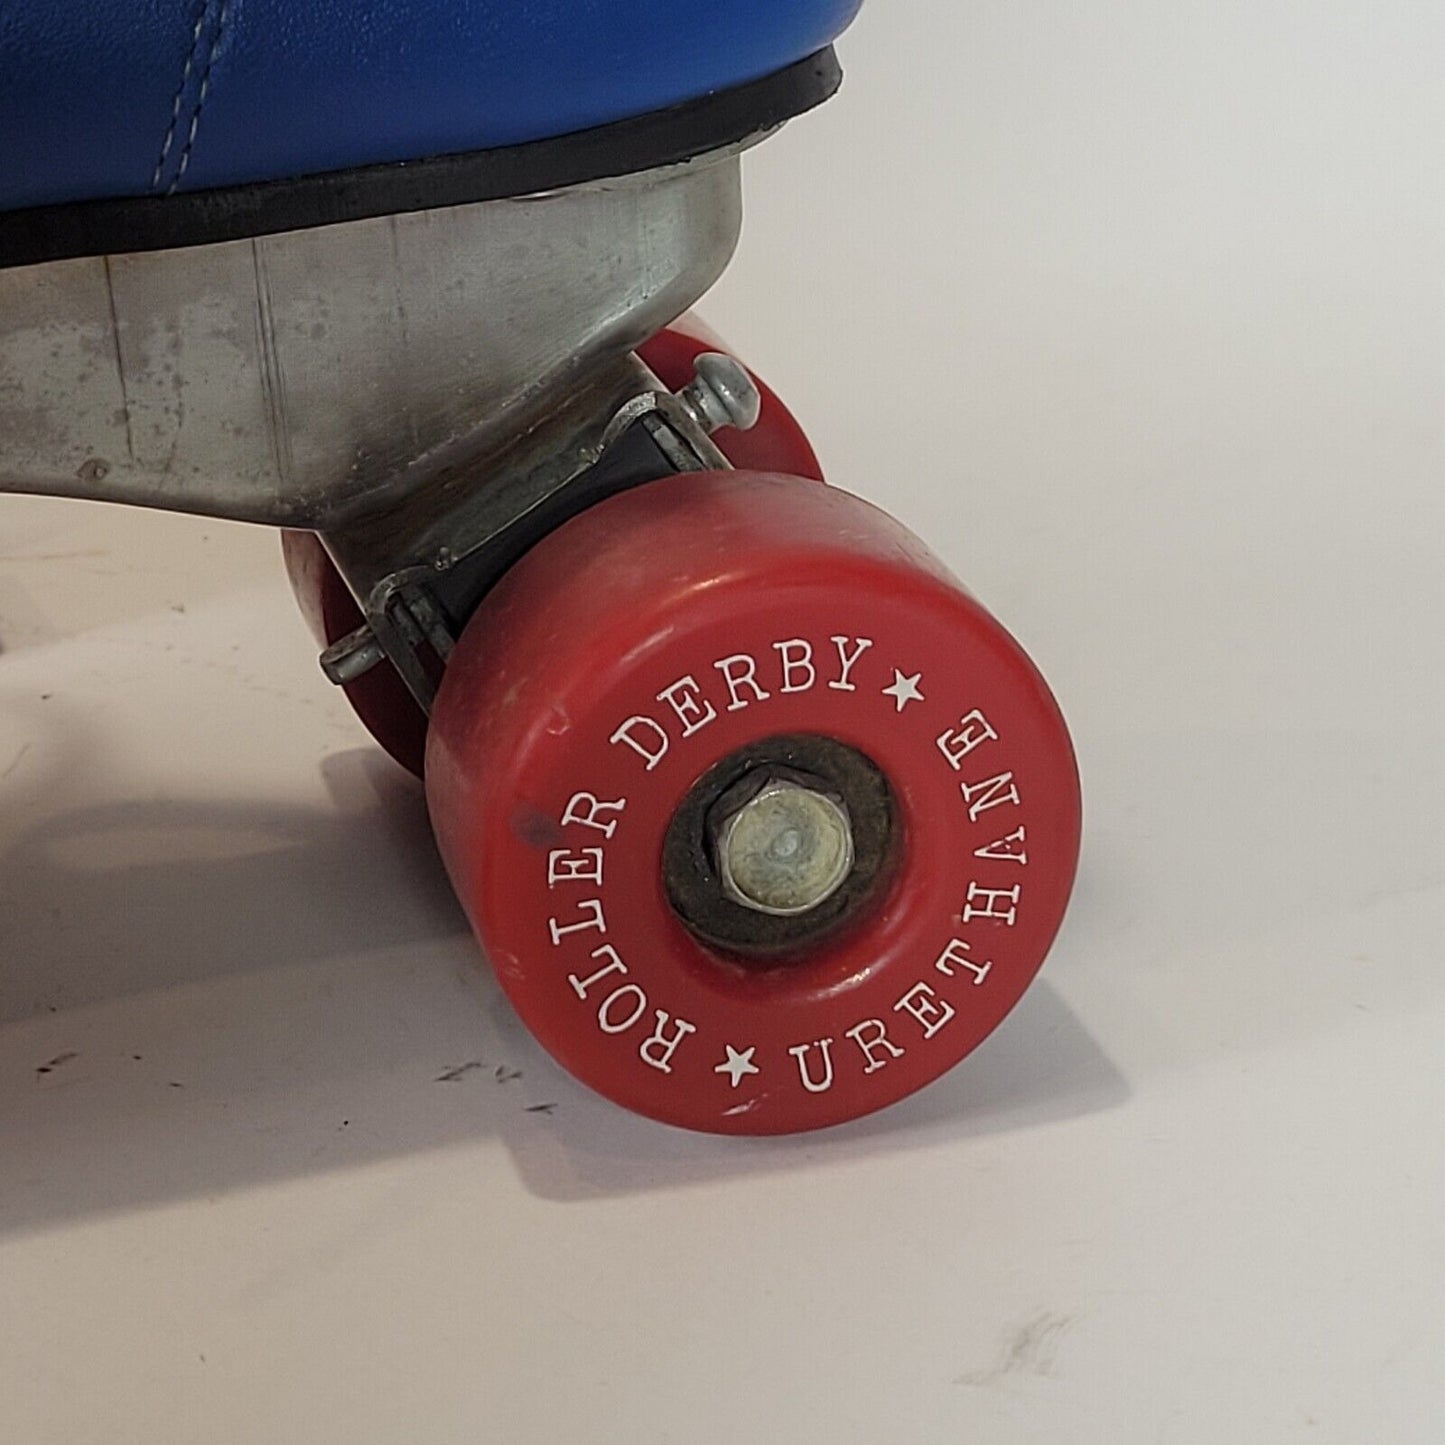 Official Vintage Roller Derby Skates Fireball Size 7 Red White & Blue 1970s